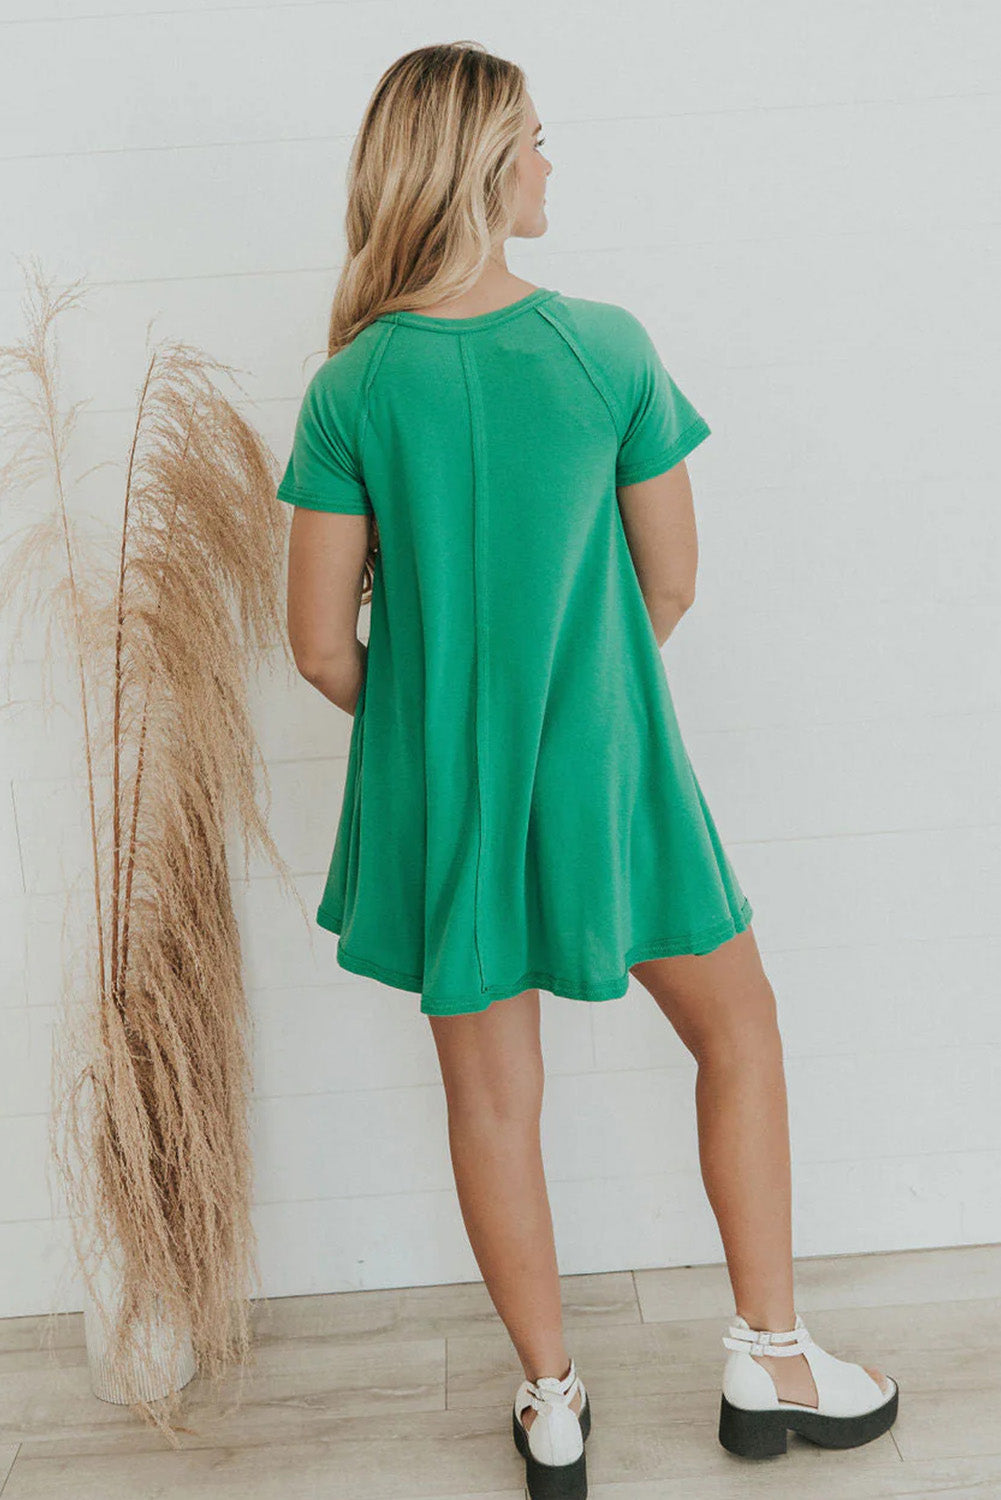 Bright Green Solid Color Short Sleeve Mini Dress